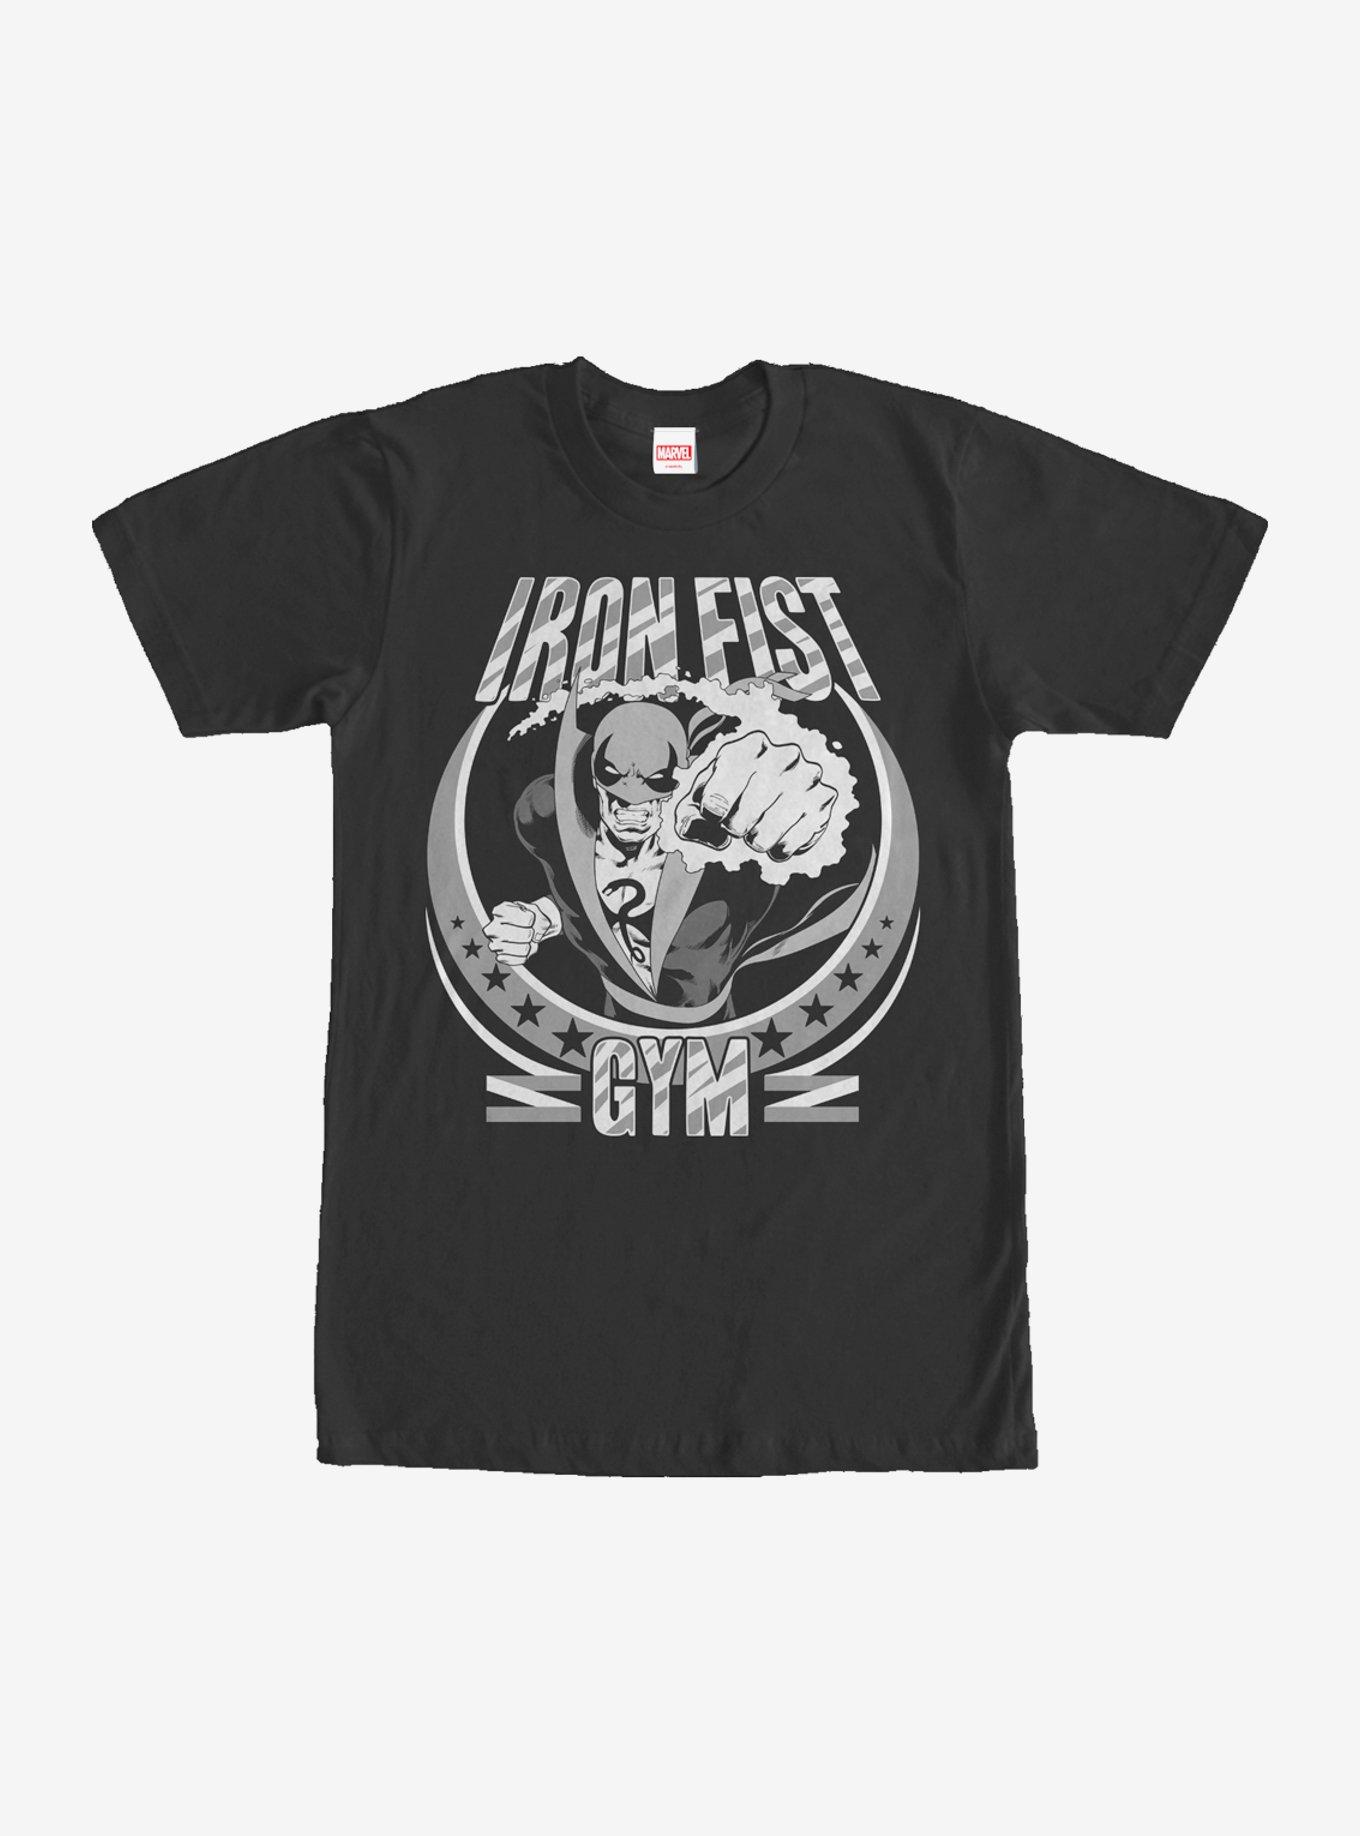 Marvel Iron Fist Gym T-Shirt, BLACK, hi-res